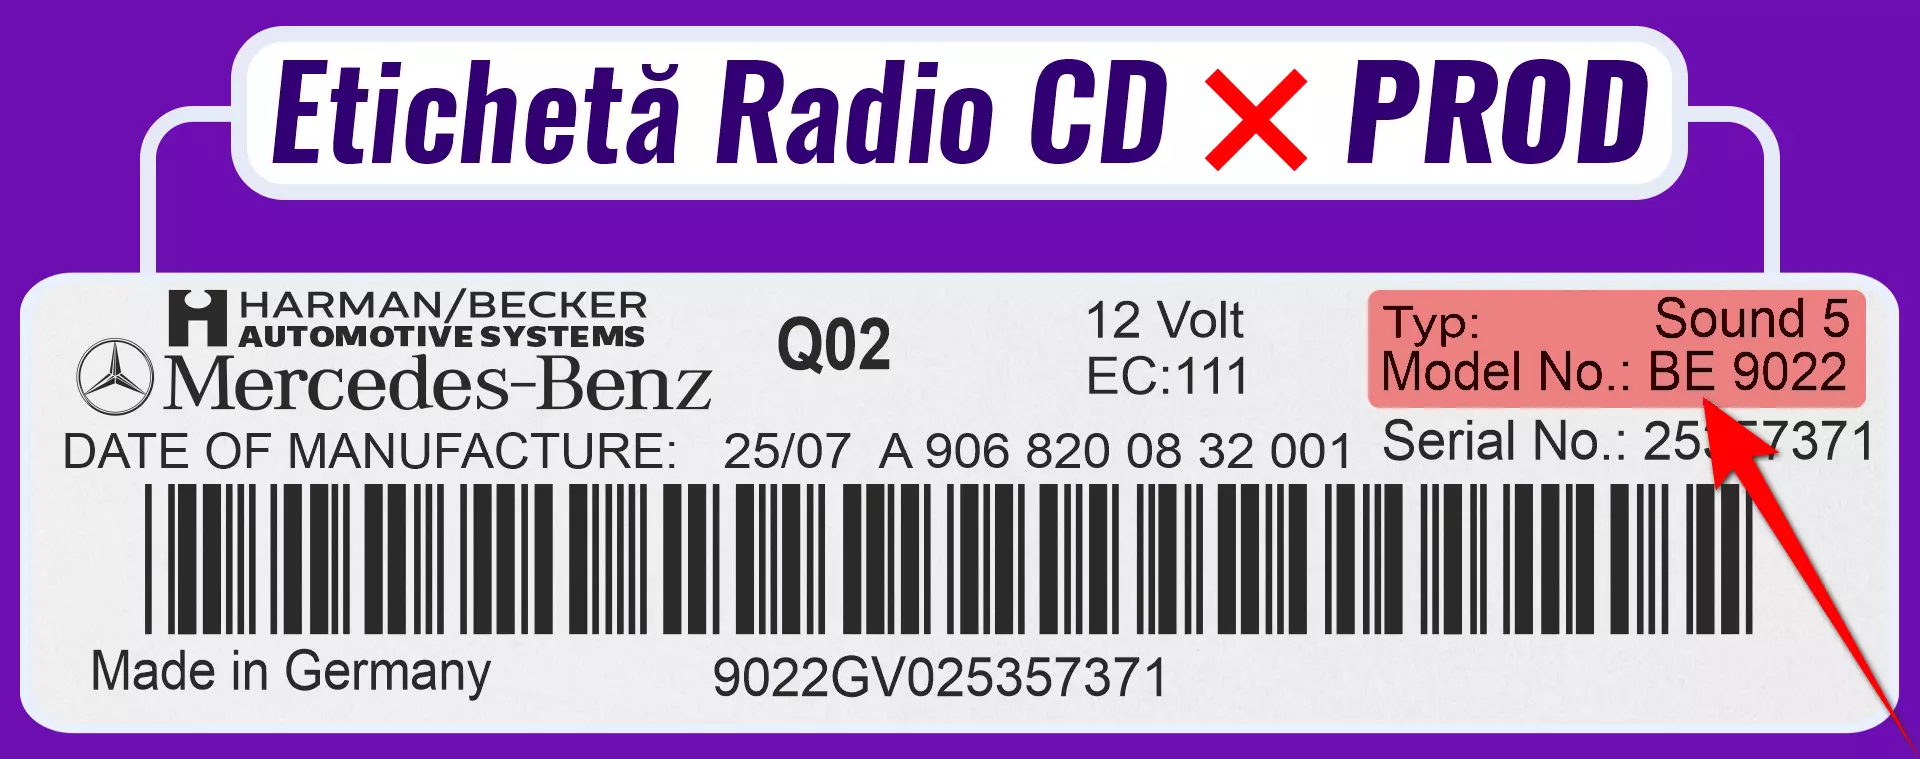 eticheta radio PROD mercedes